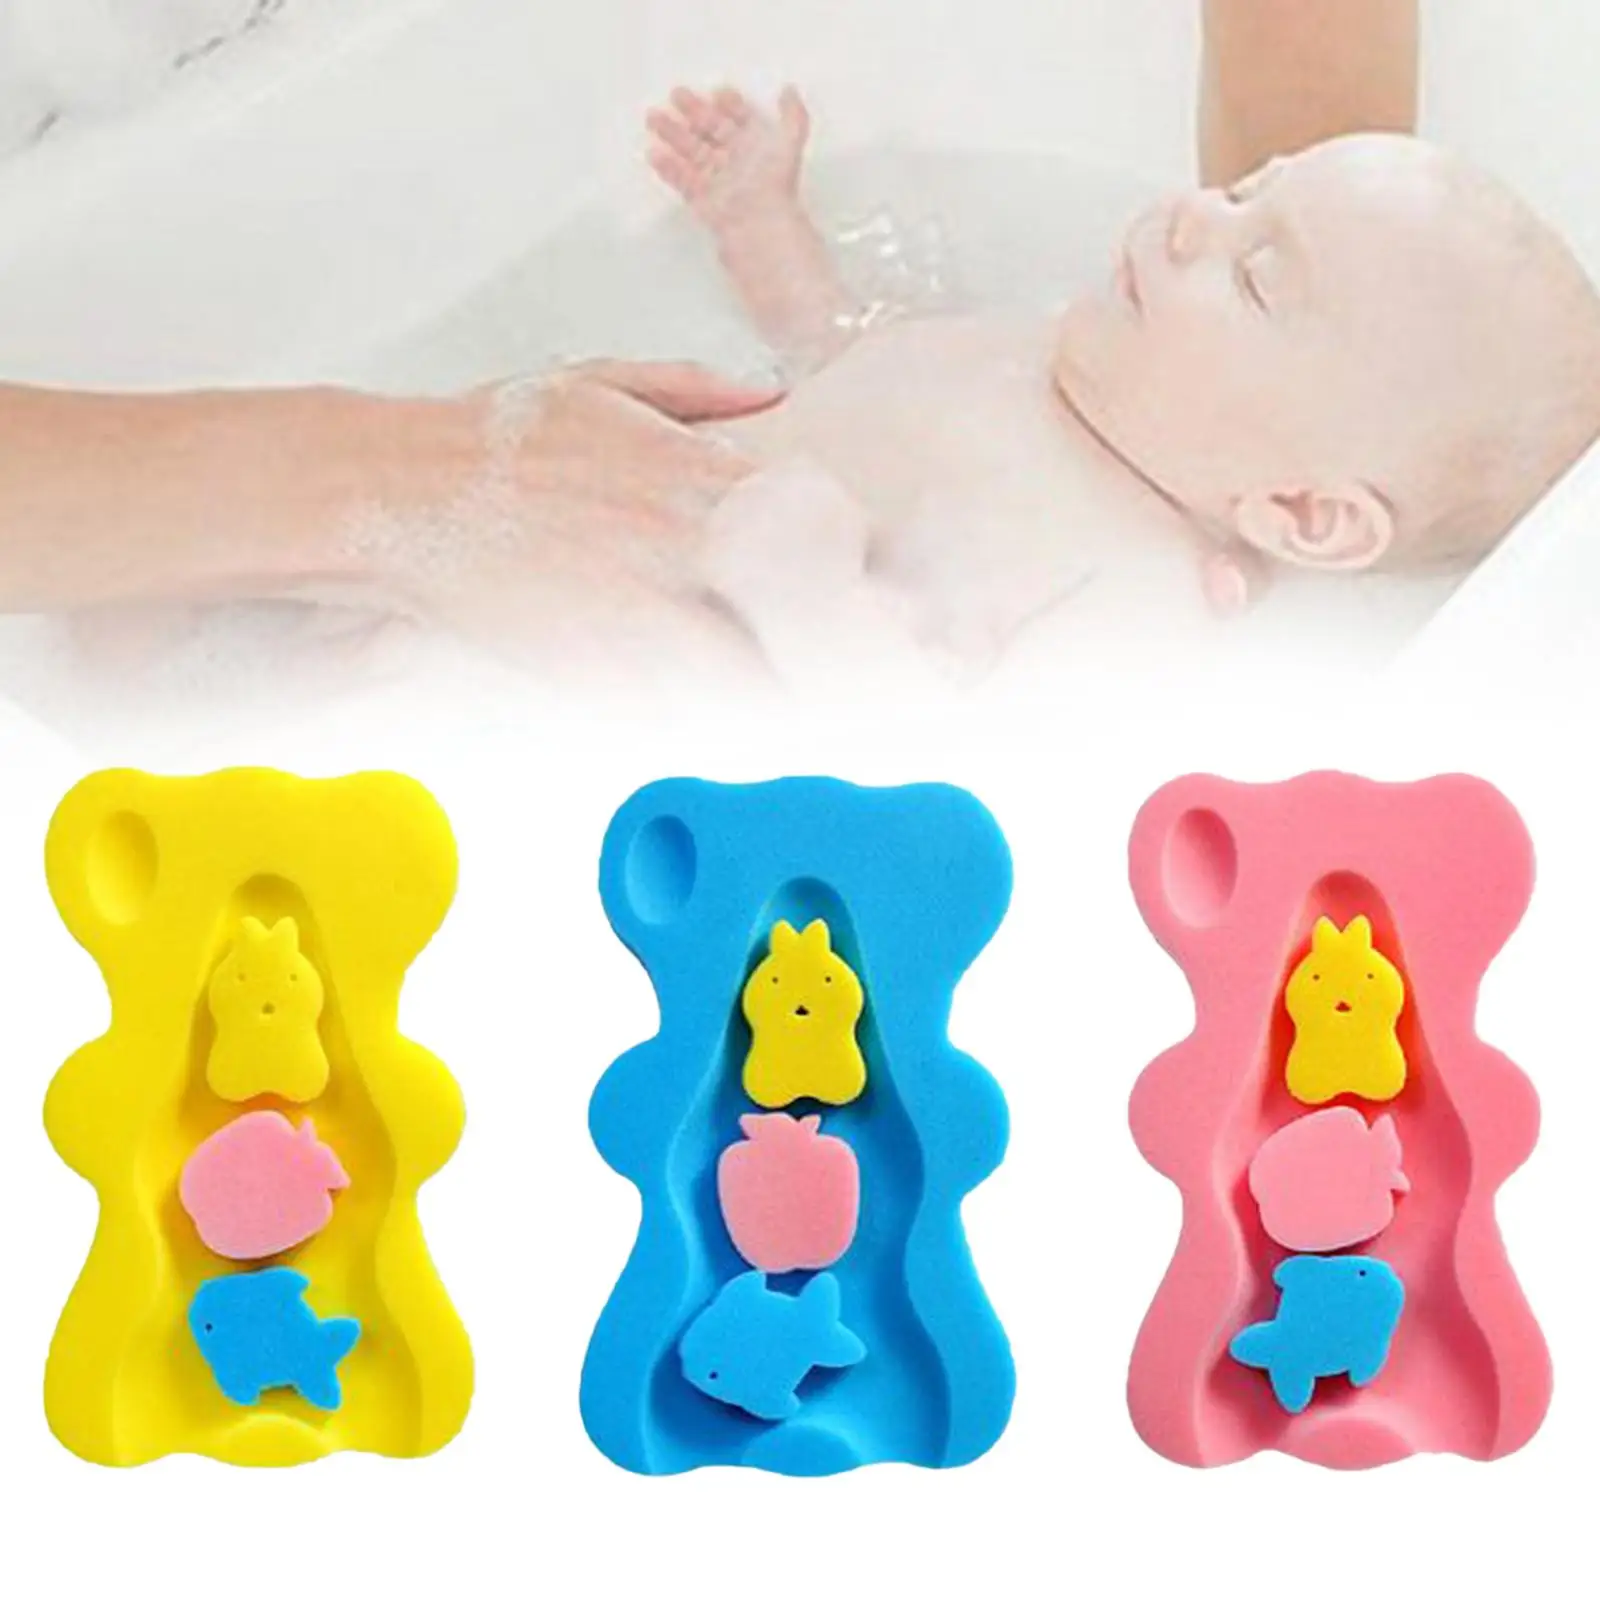  Mat Bath Sponge Non-Slip Cartoon  Infant Bed Shower Sponge Cushion for Toddlers Bathroom  Baby Care Newborn